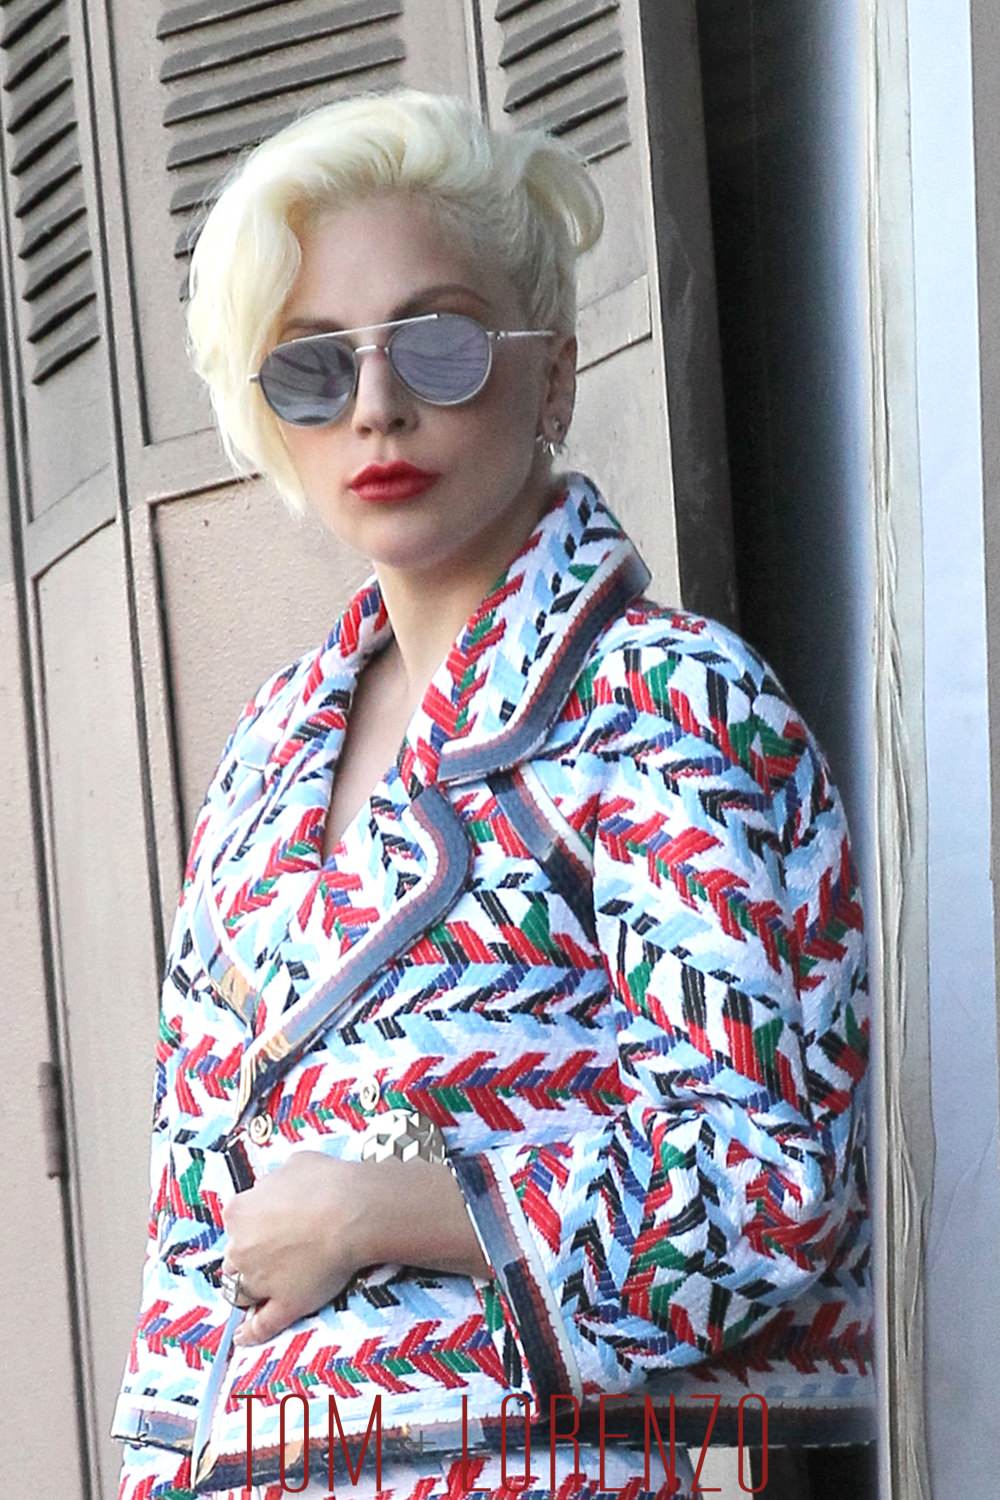 Lady-Gaga-GOTSNYC-Street-Style-Fashion-Chanel-Tom-Lorenzo-Site (1)